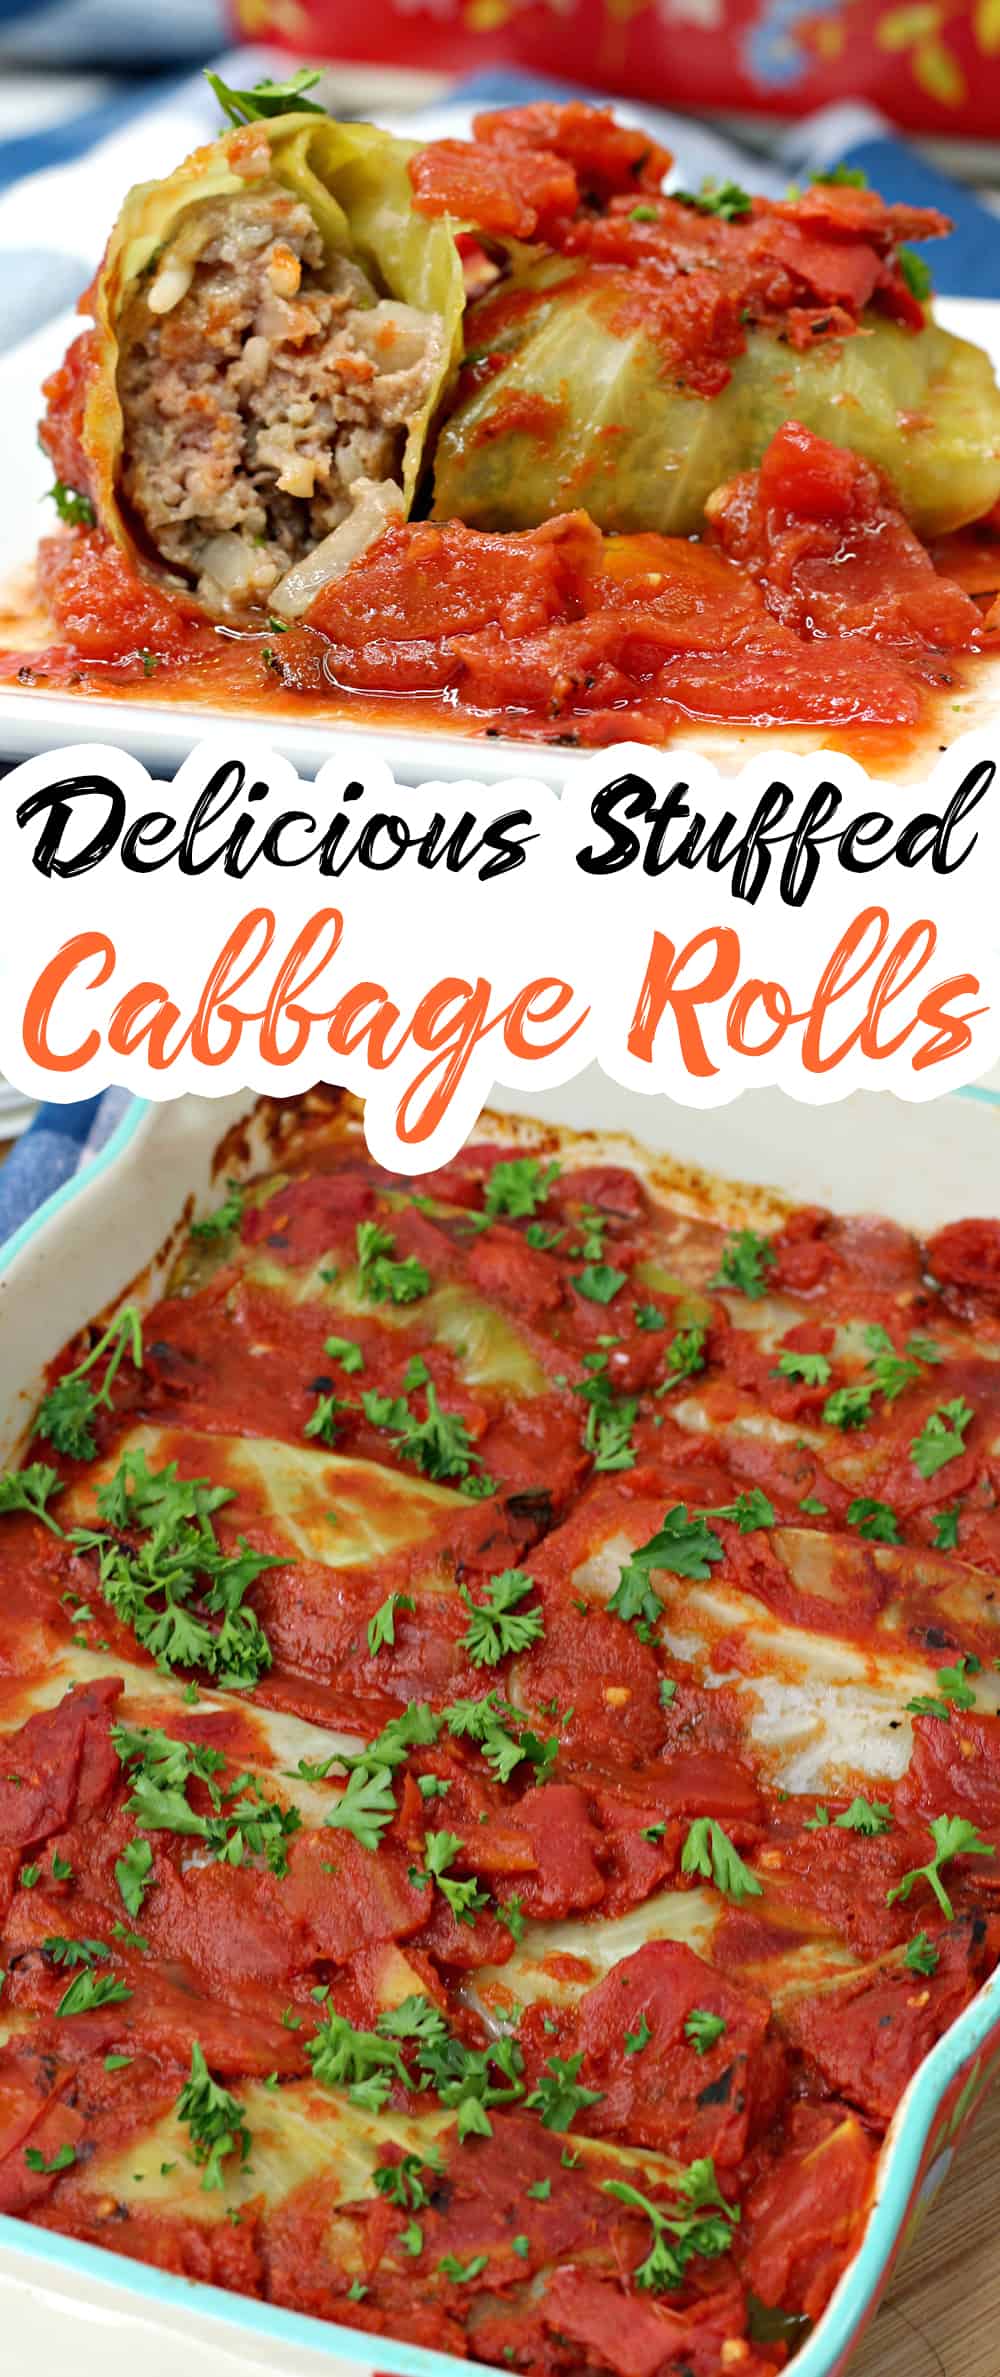 Stuffed Cabbage rolls